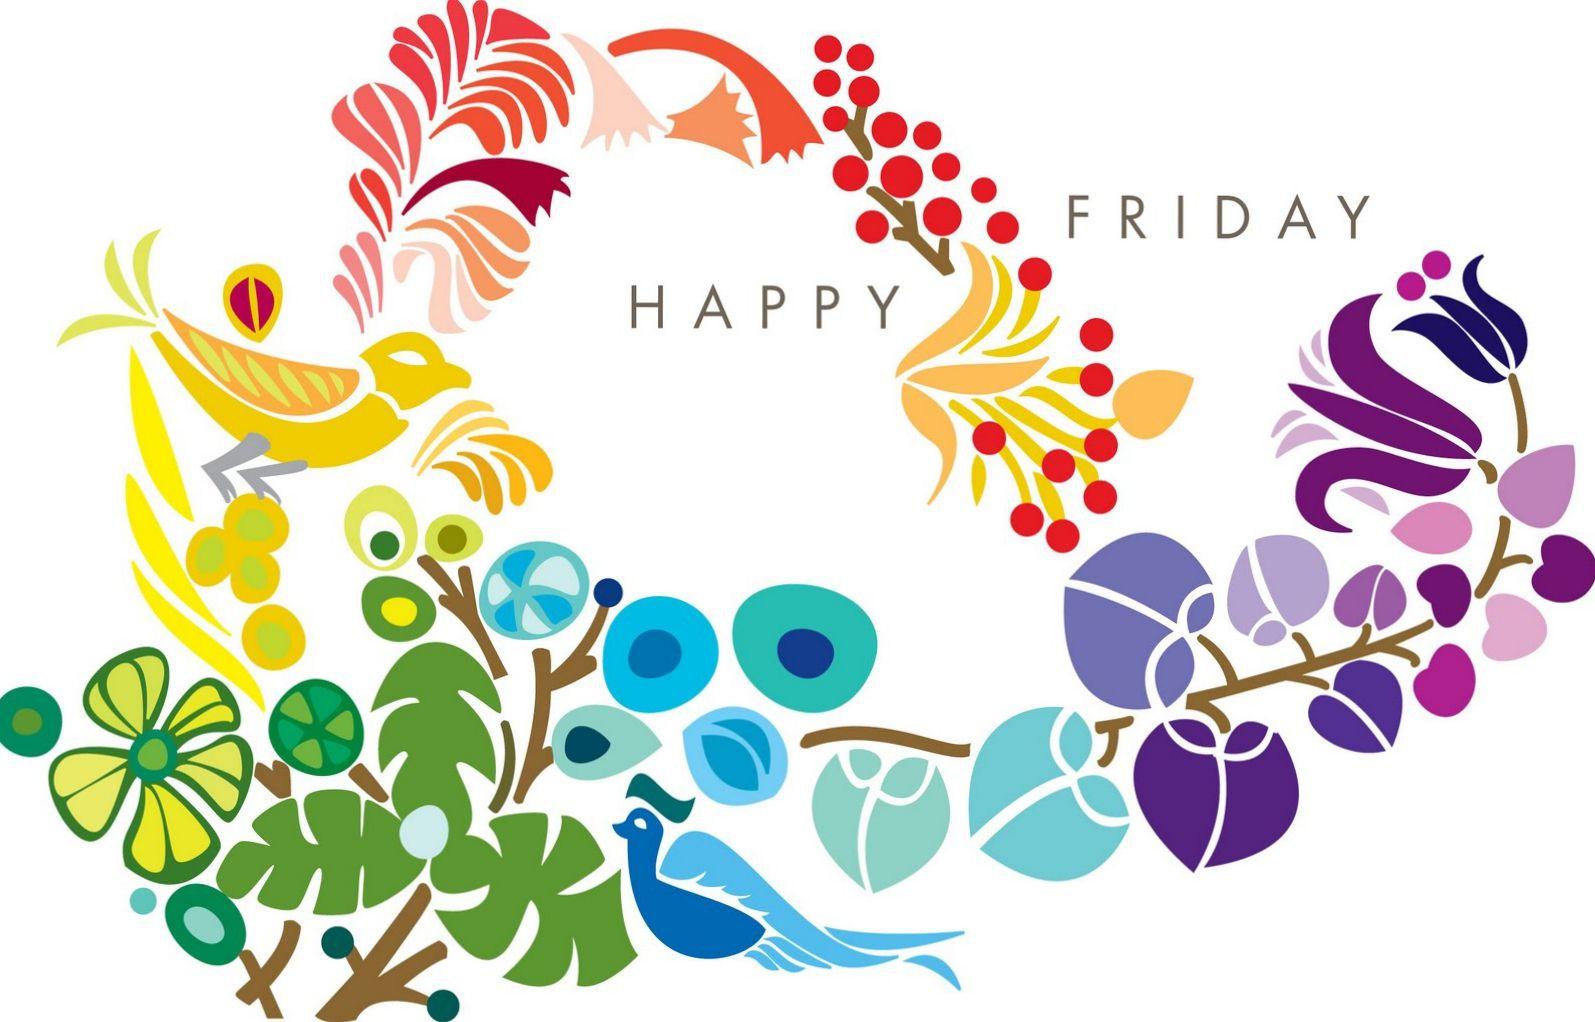 Happy Friday Colorful Good Friday Birds image wallpaper Art